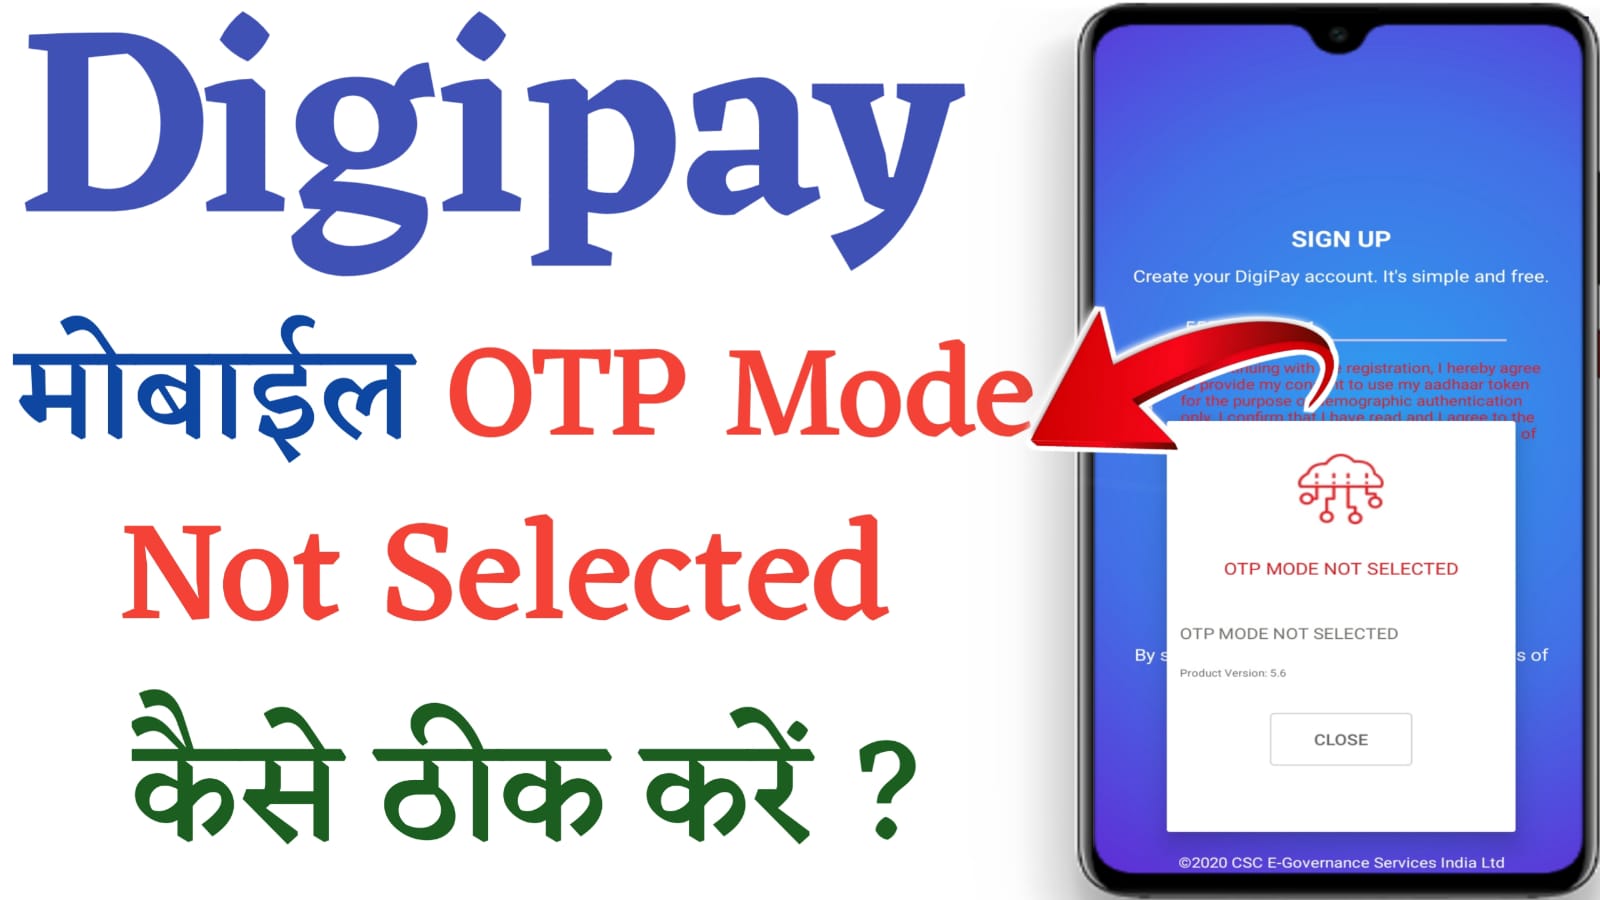 Digipay new version 6.0 download